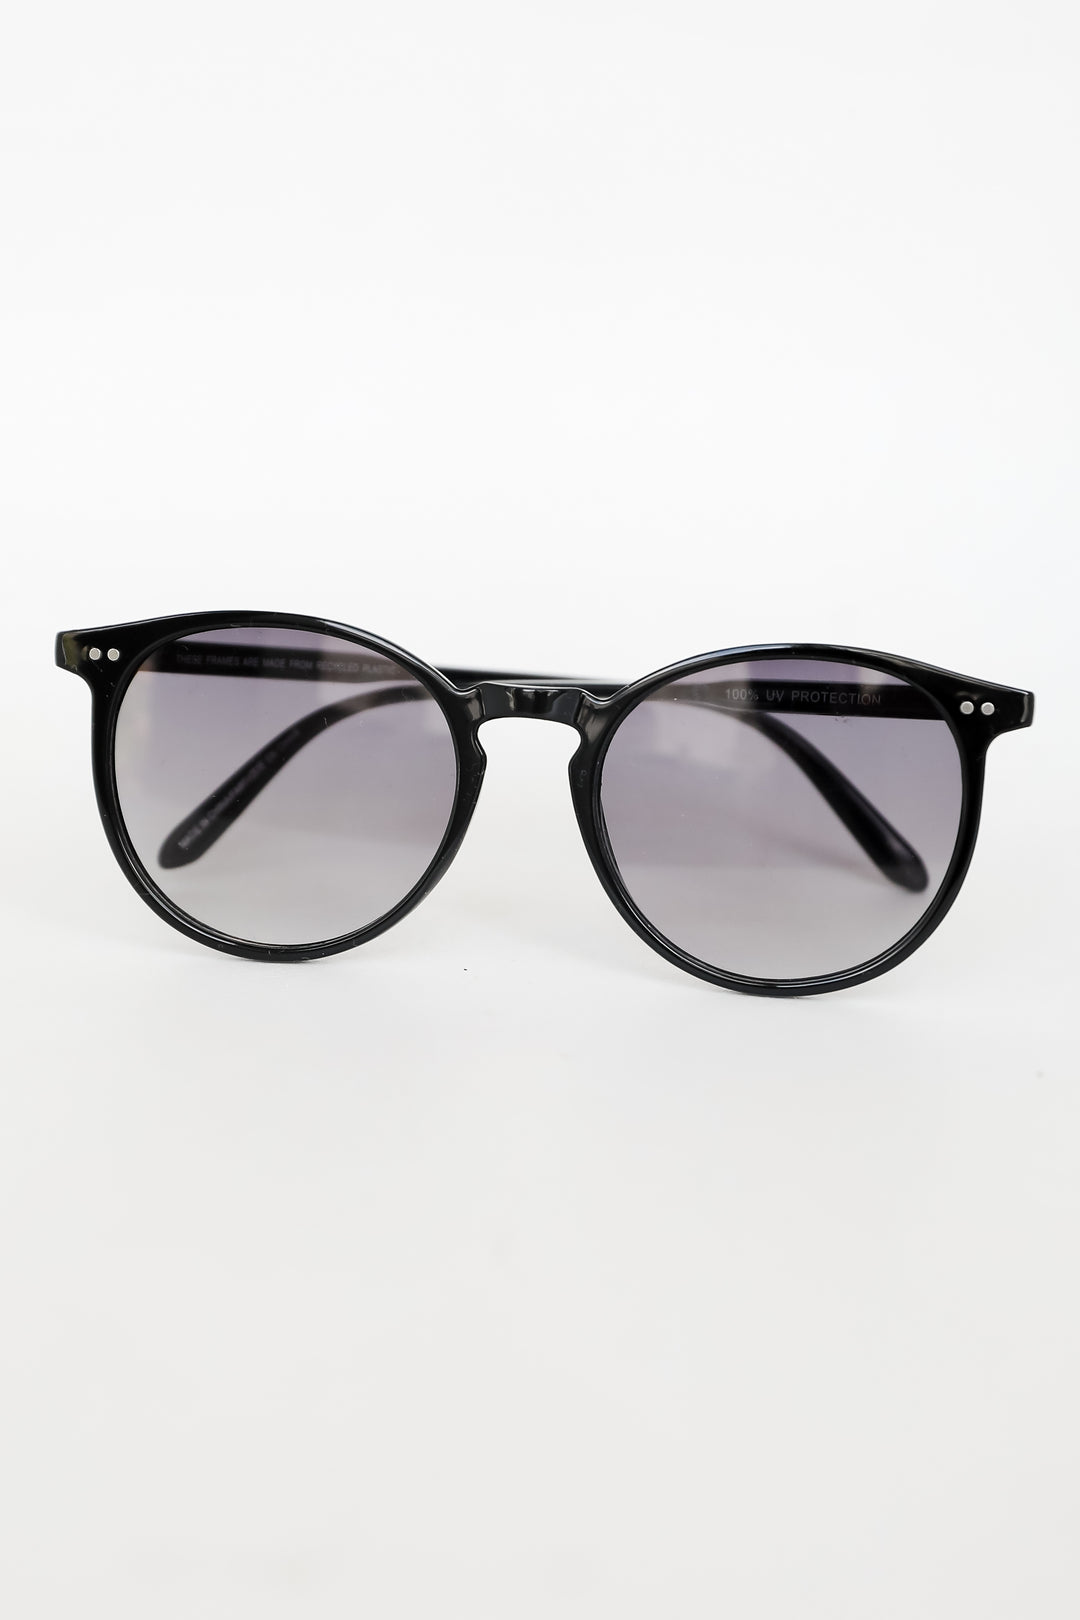 Perfectly Iconic Black Round Sunglasses